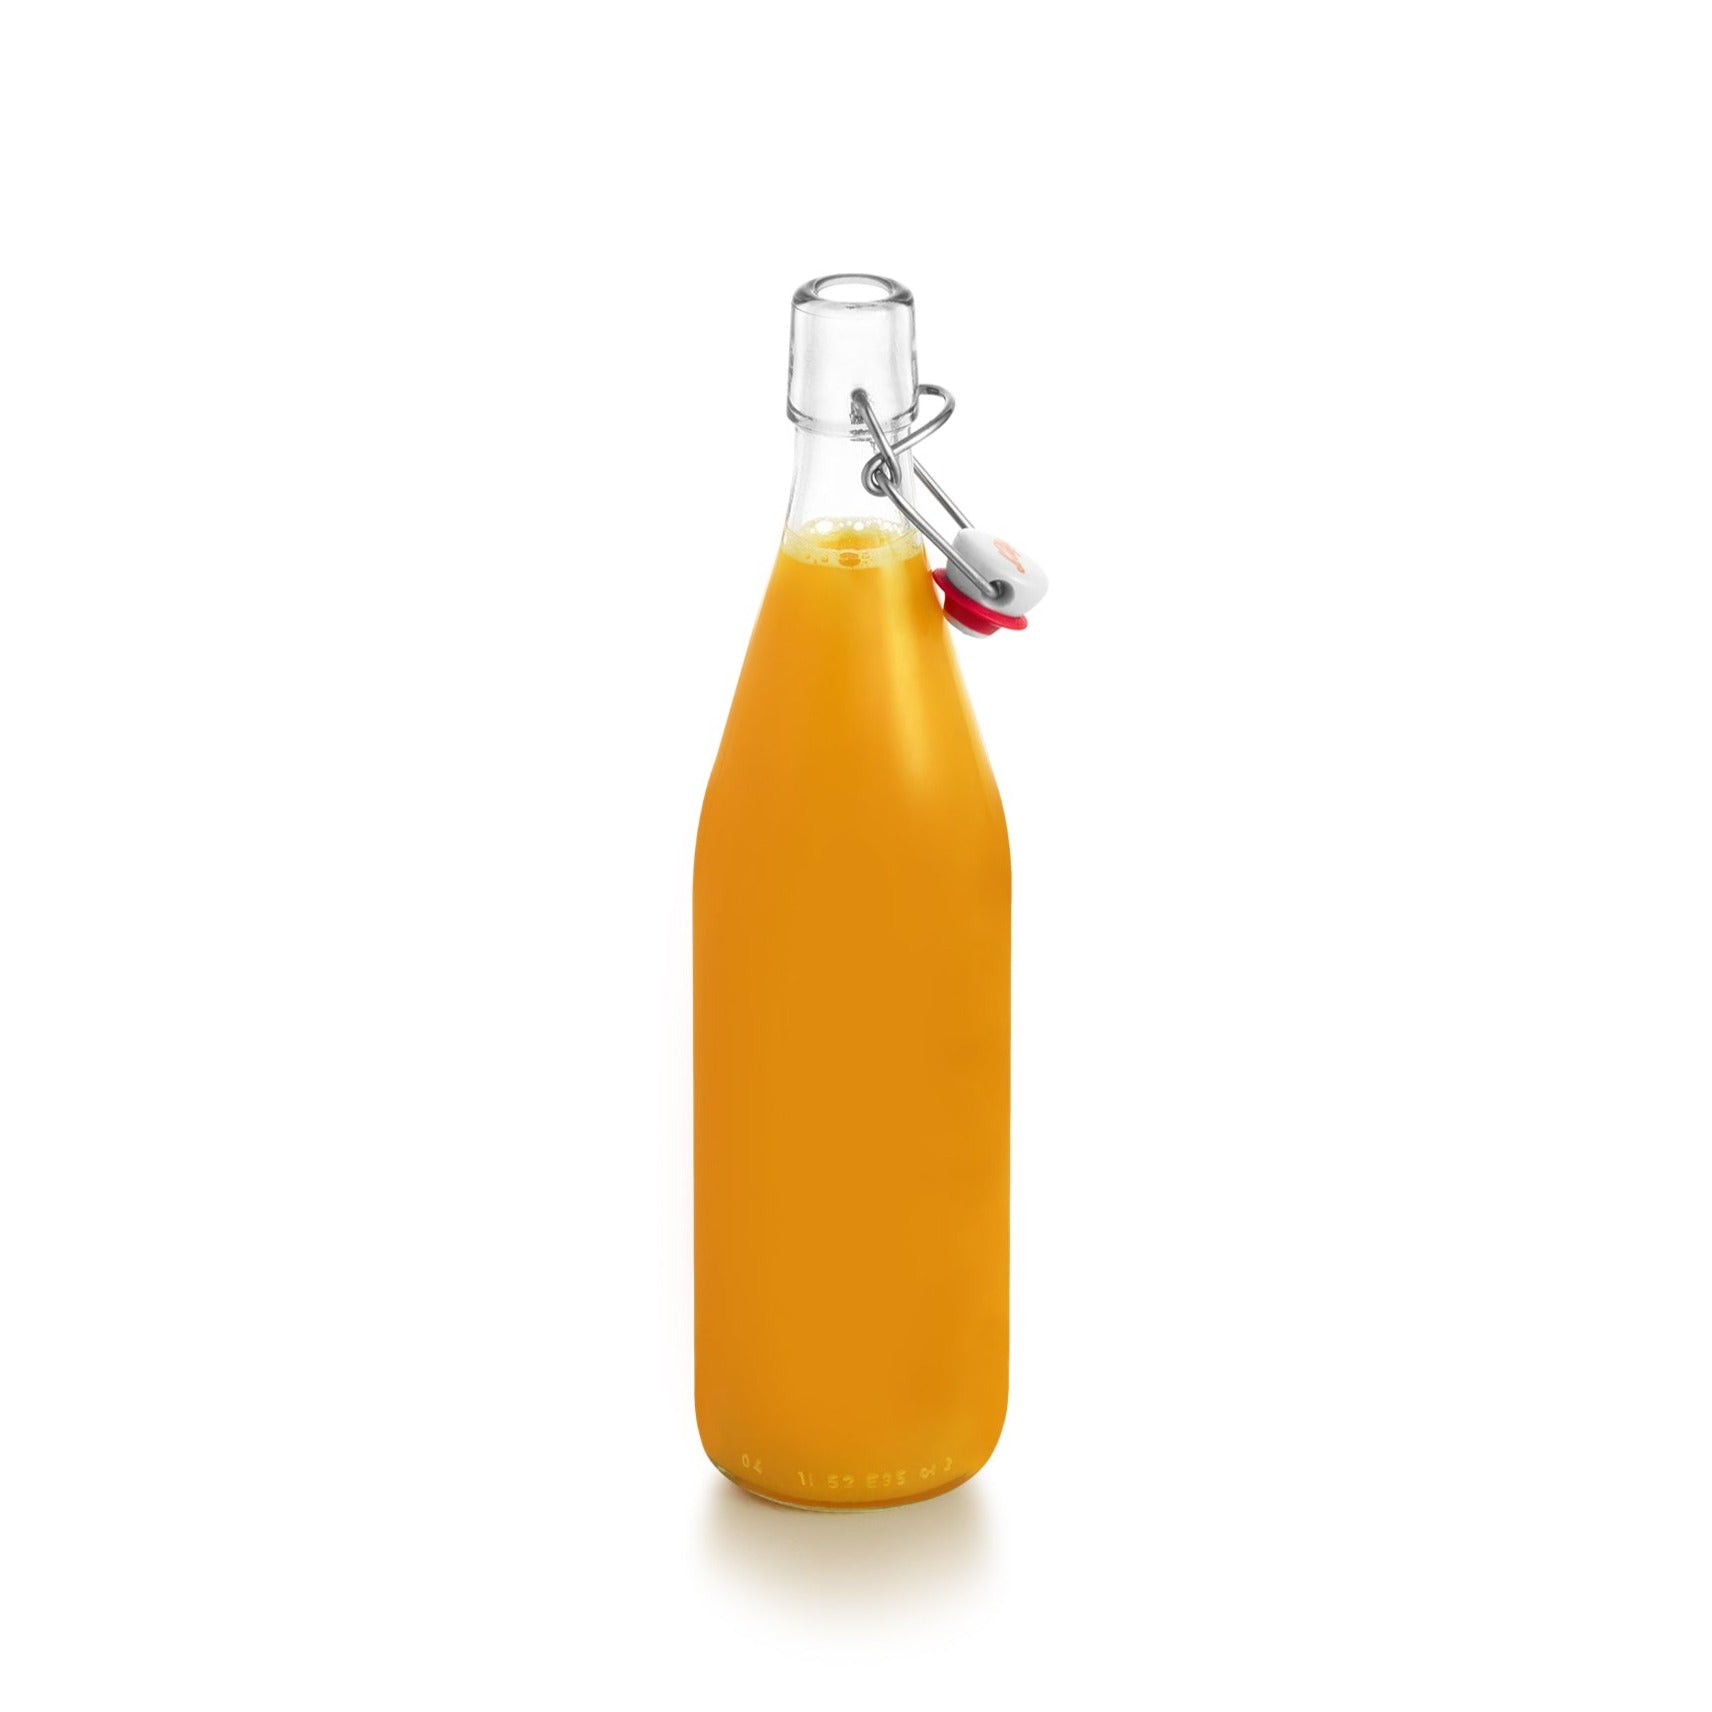 Juice bottle screw cap 1L